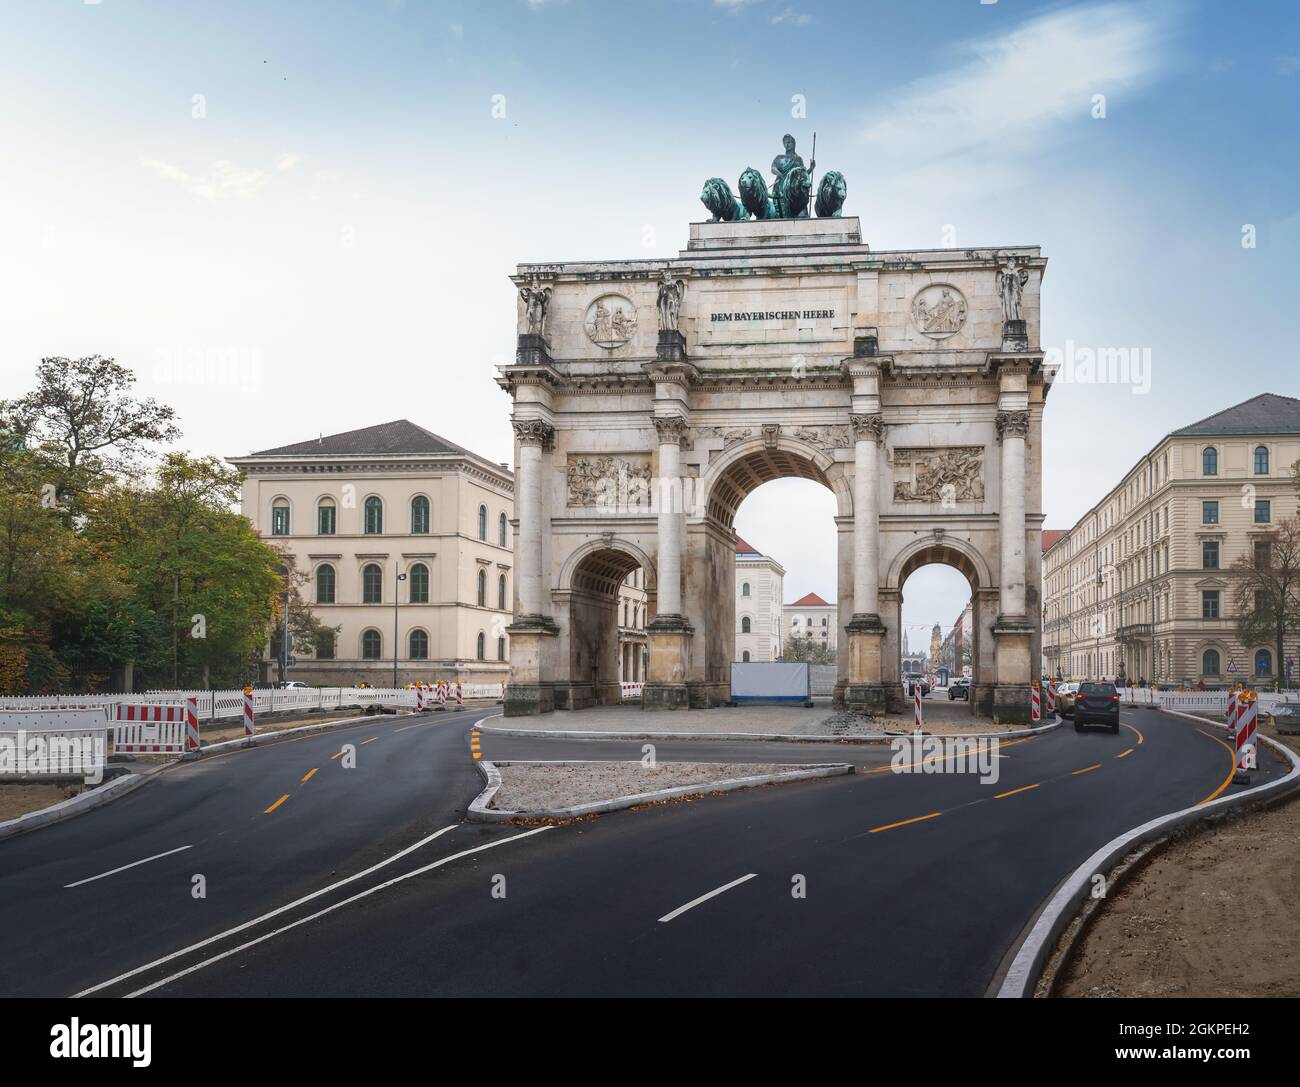 Siegestor (Victory Gate) - Munich, Bavaria, Germany Stock Photo - Alamy